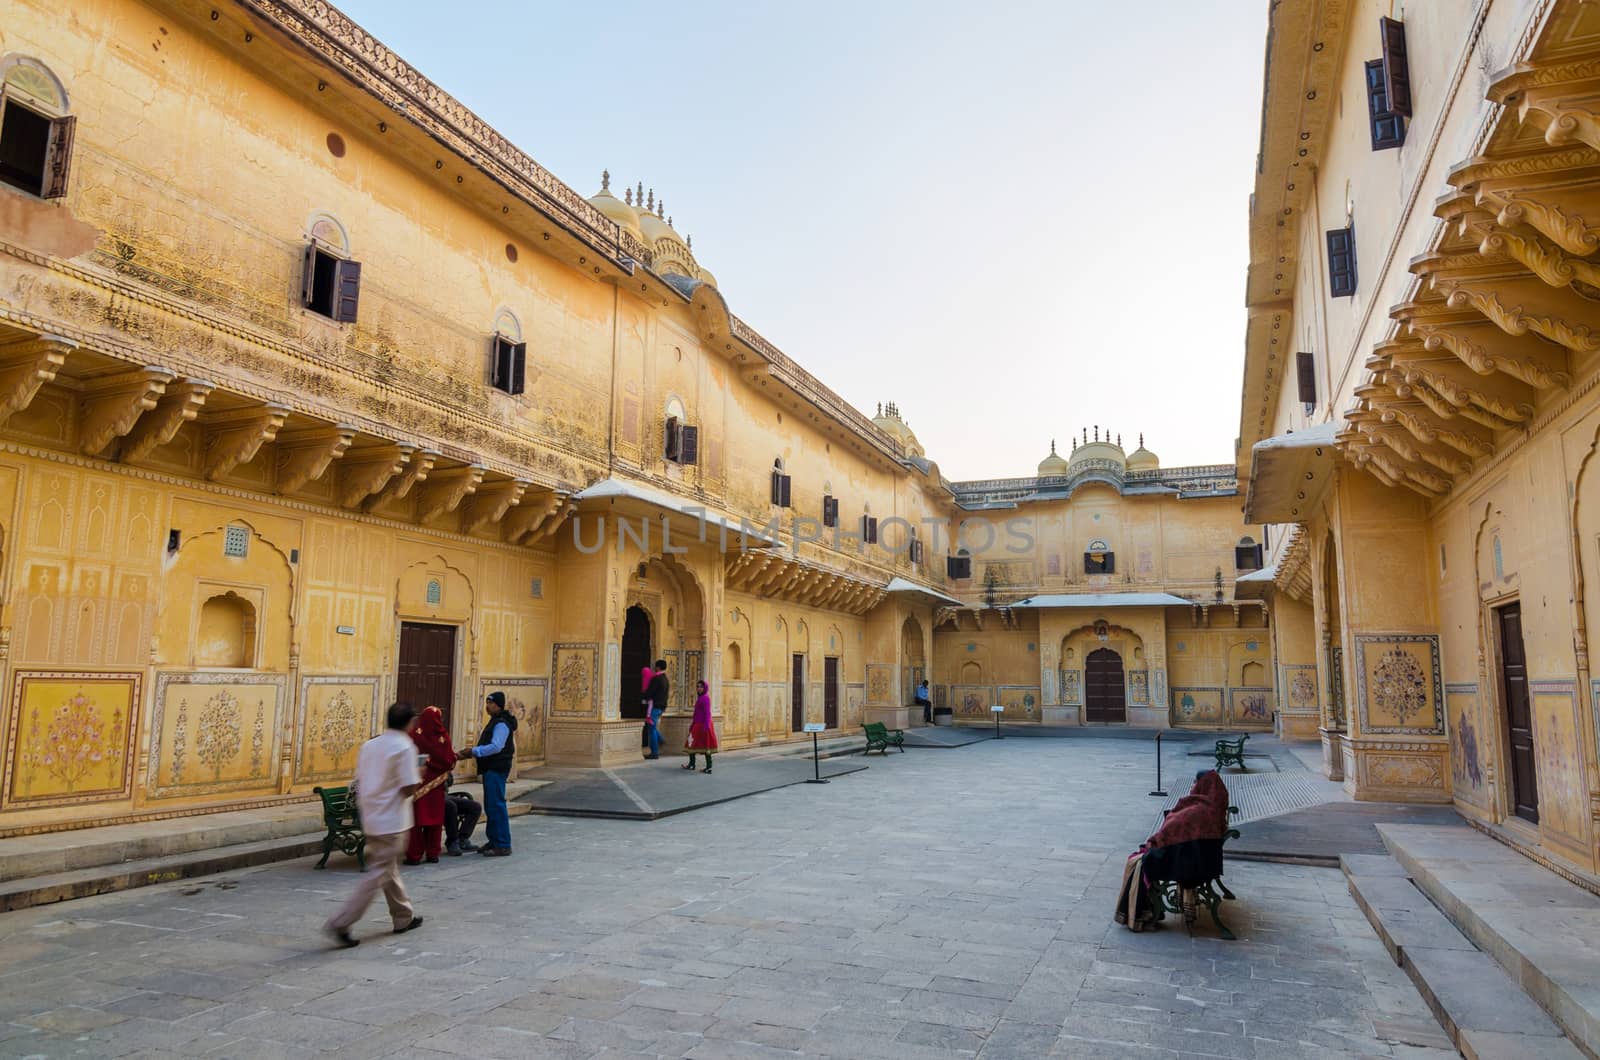 Jaipur, India - December 30, 2014: Tourist visit Traditional architecture, Nahargarh Fort in Jaipur, Rajasthan, India.  Nahargarh Fort Built mainly in 1734 by Maharaja Sawai Jai Singh II, the founder of Jaipur.